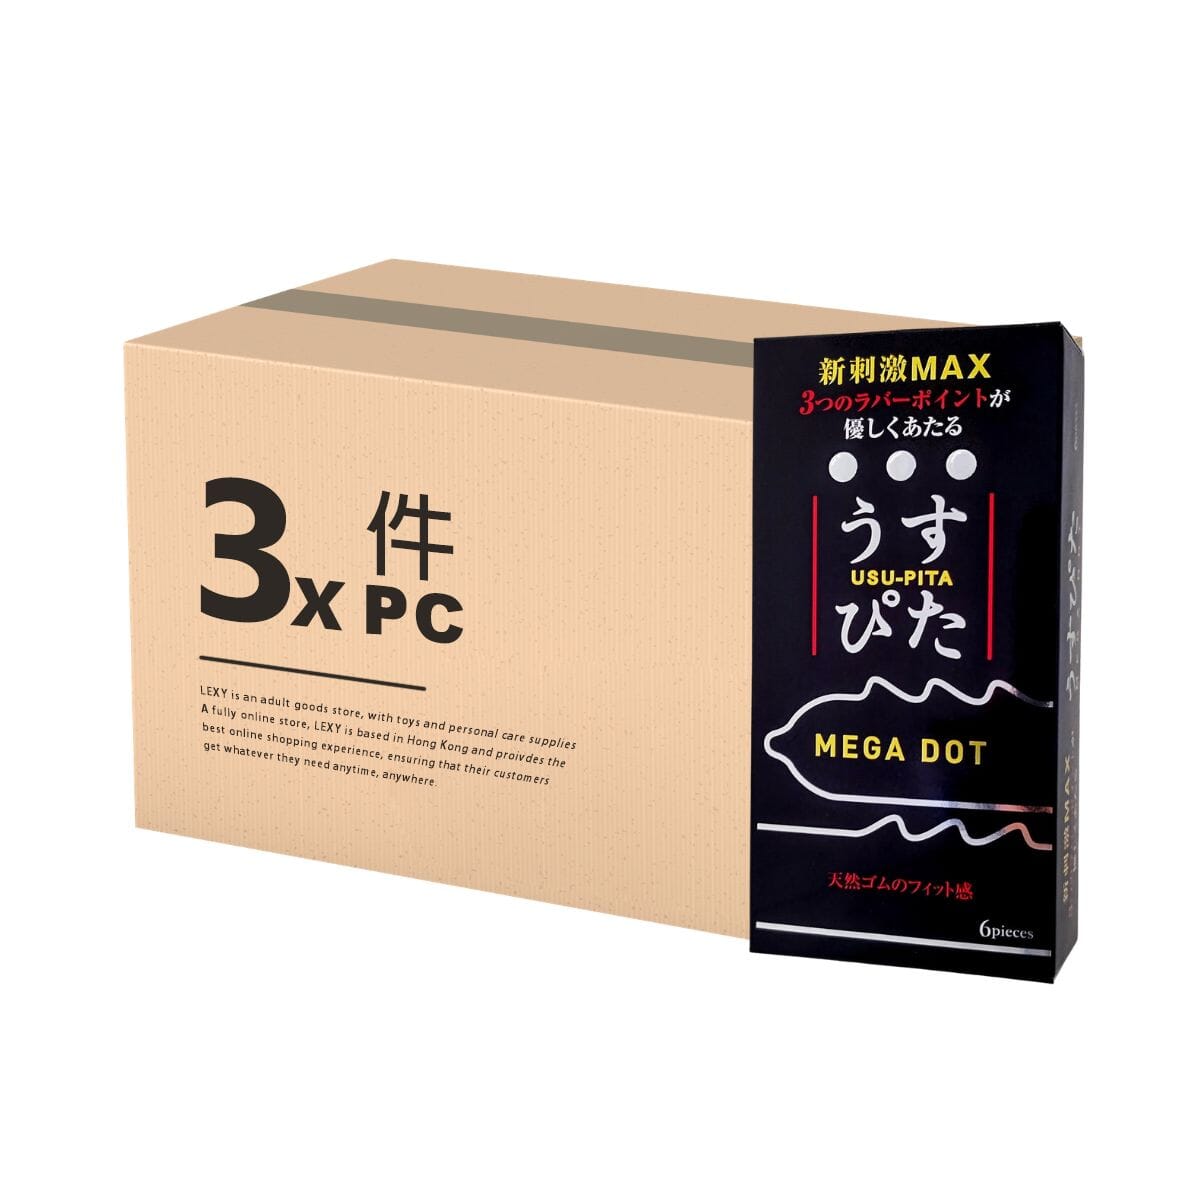 JAPAN MEDICAL Mega Dot 3 連擊安全套 6 片裝 X 3 件 購買